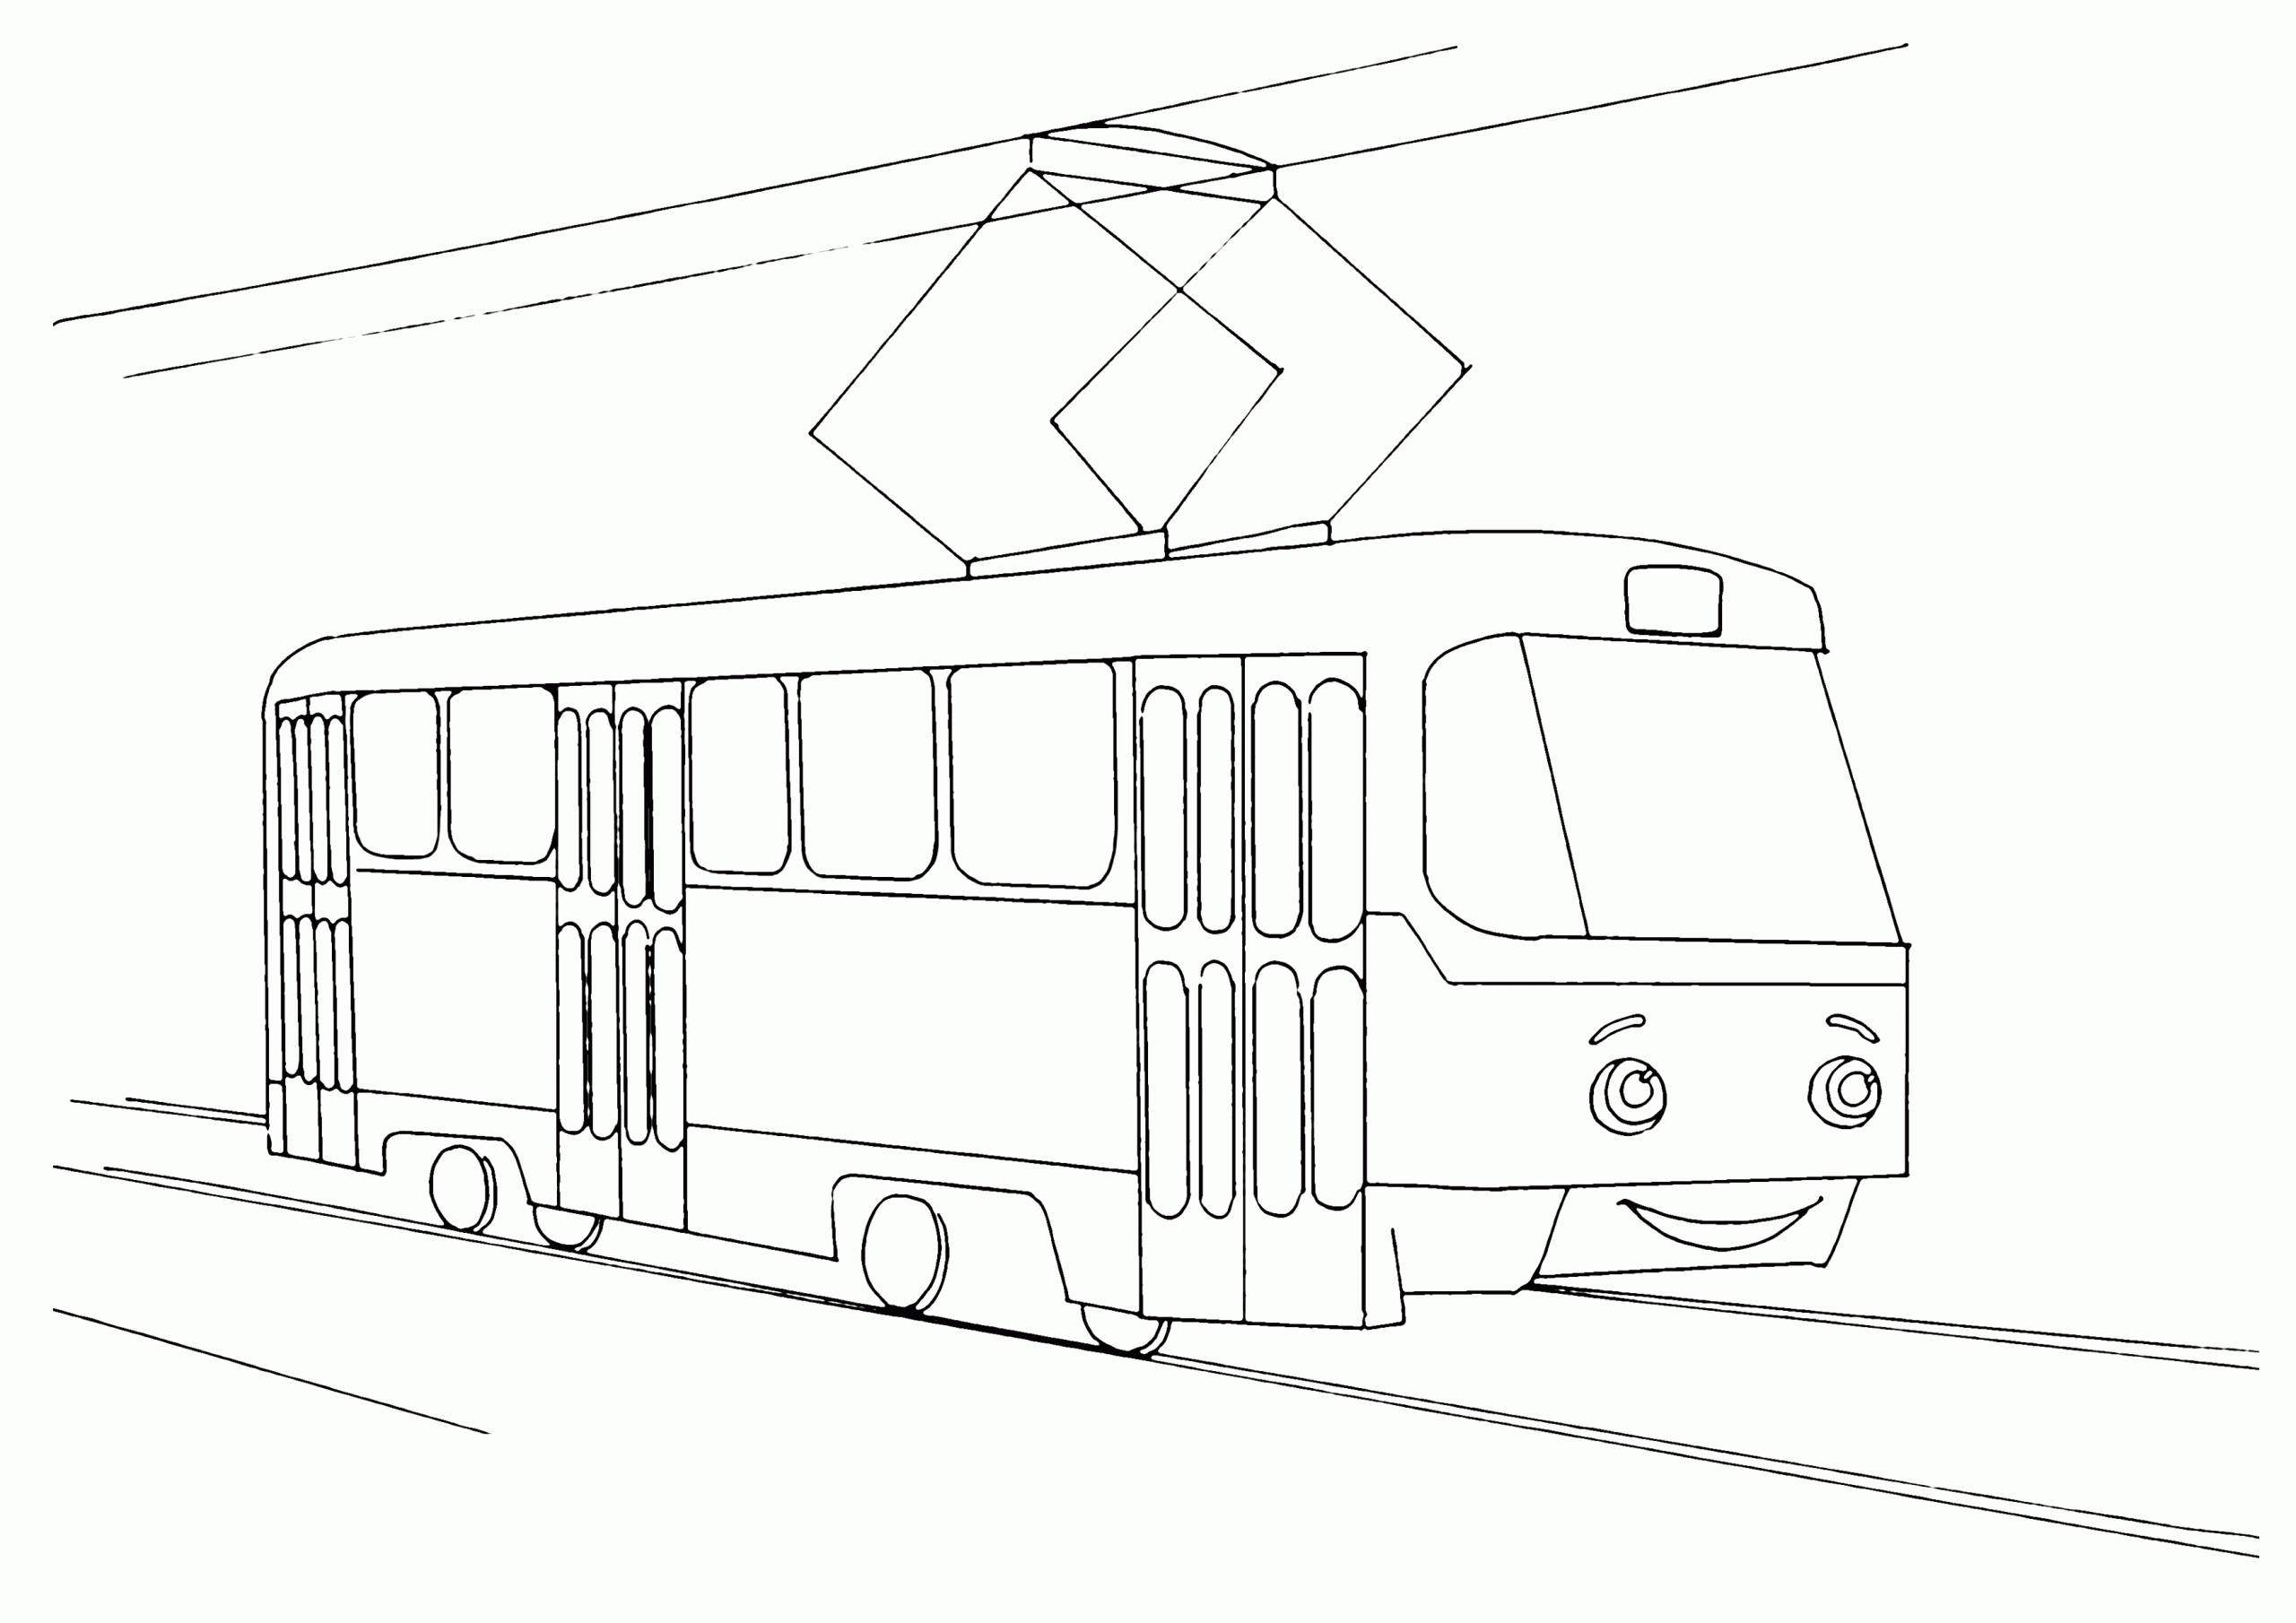 Tram drawing